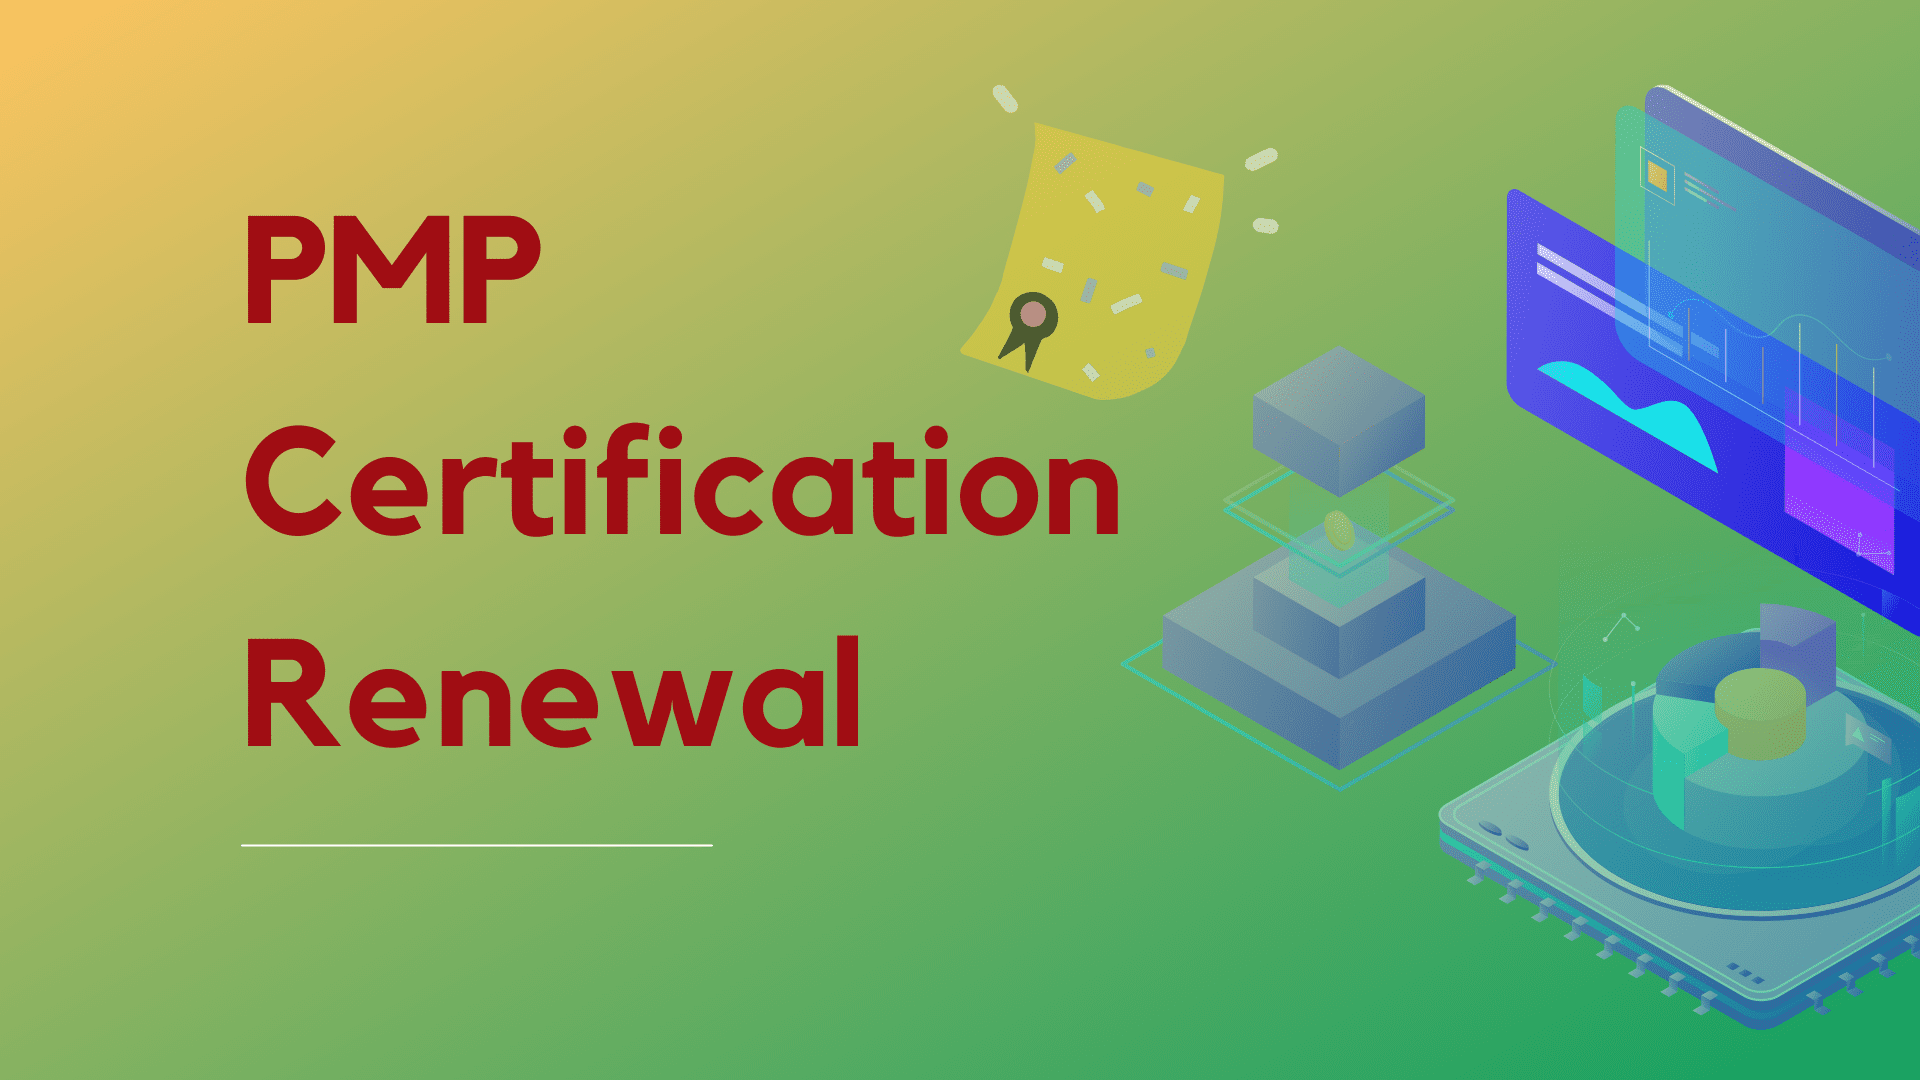 pmp certification renewal